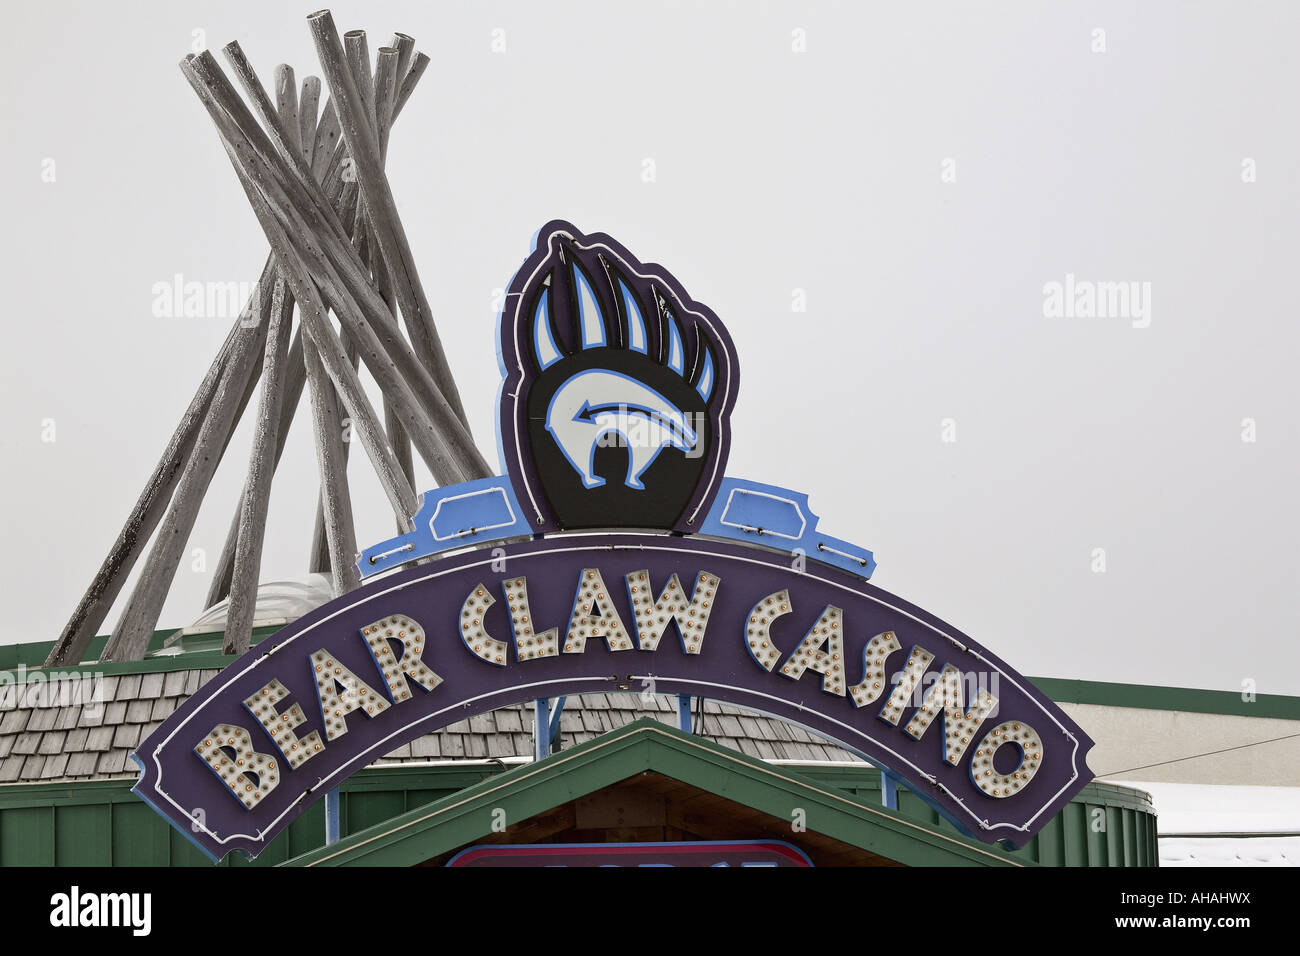 Jl7216 Painet signo casino reserva india White Bear Claw Saskatchewan Canadá 5 primeras naciones viaje color digital horizontal Foto de stock